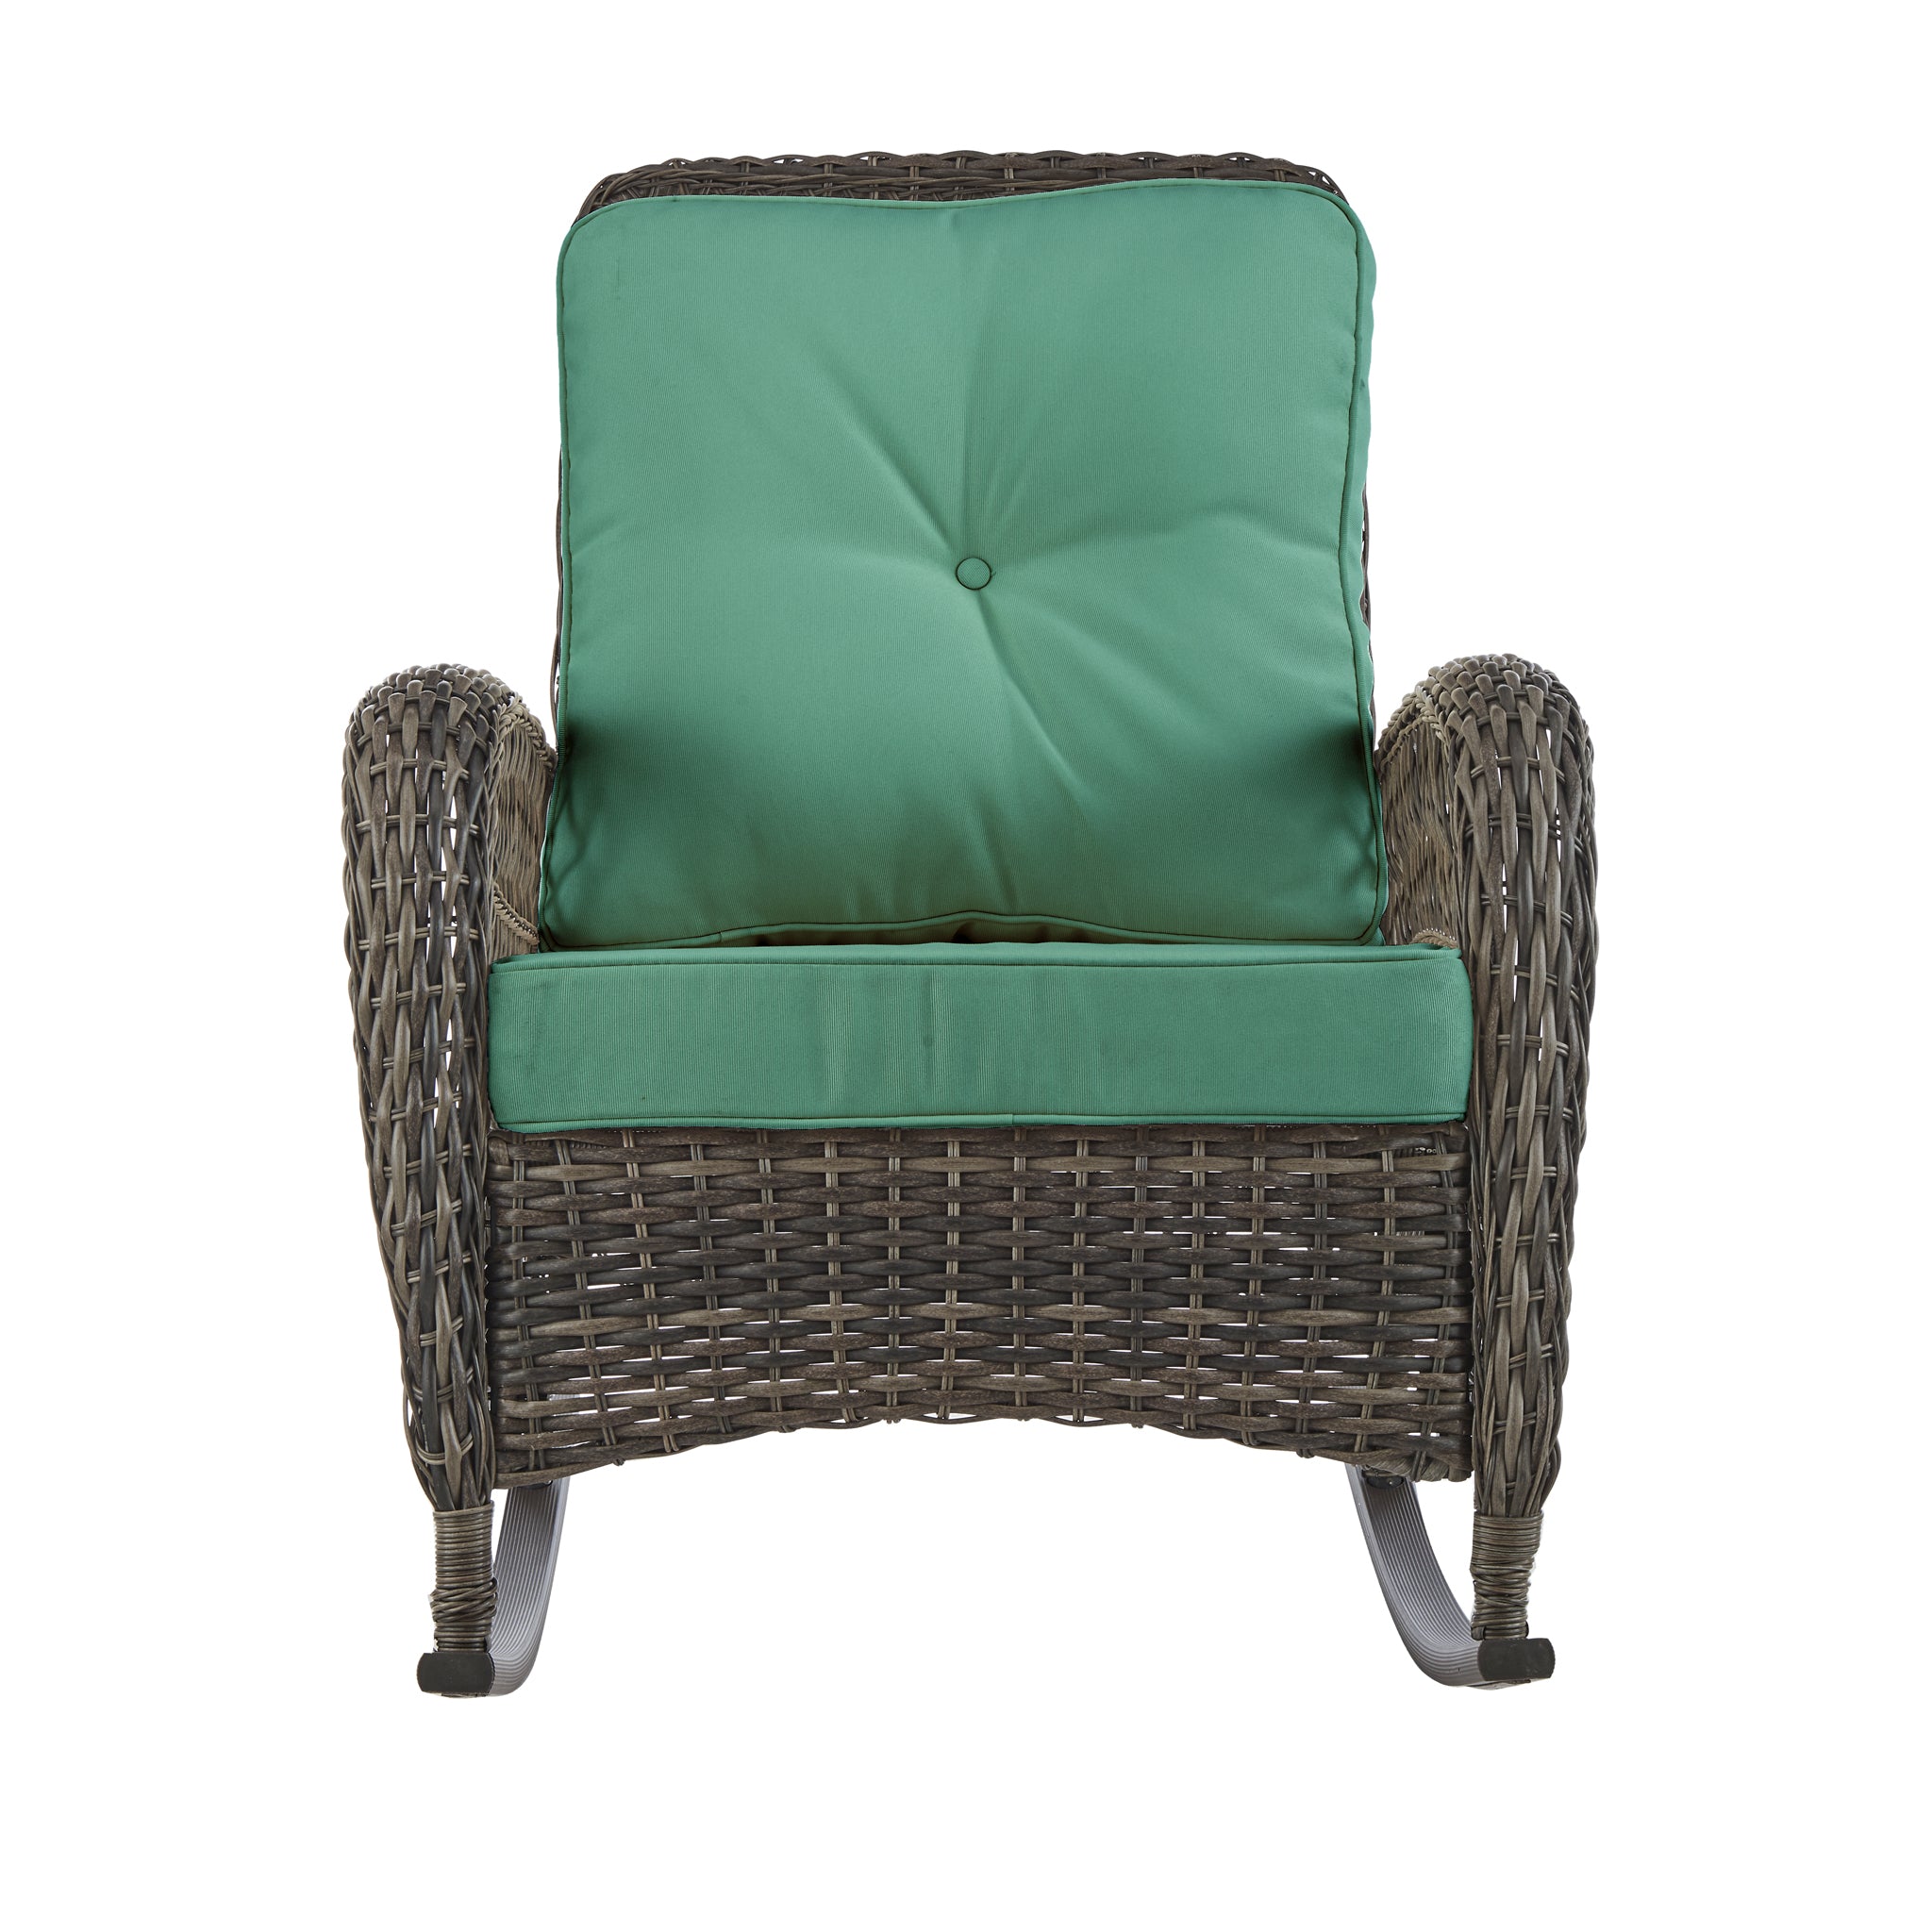 Grey Wicker Garden Rocking Chair With Cushions - Green